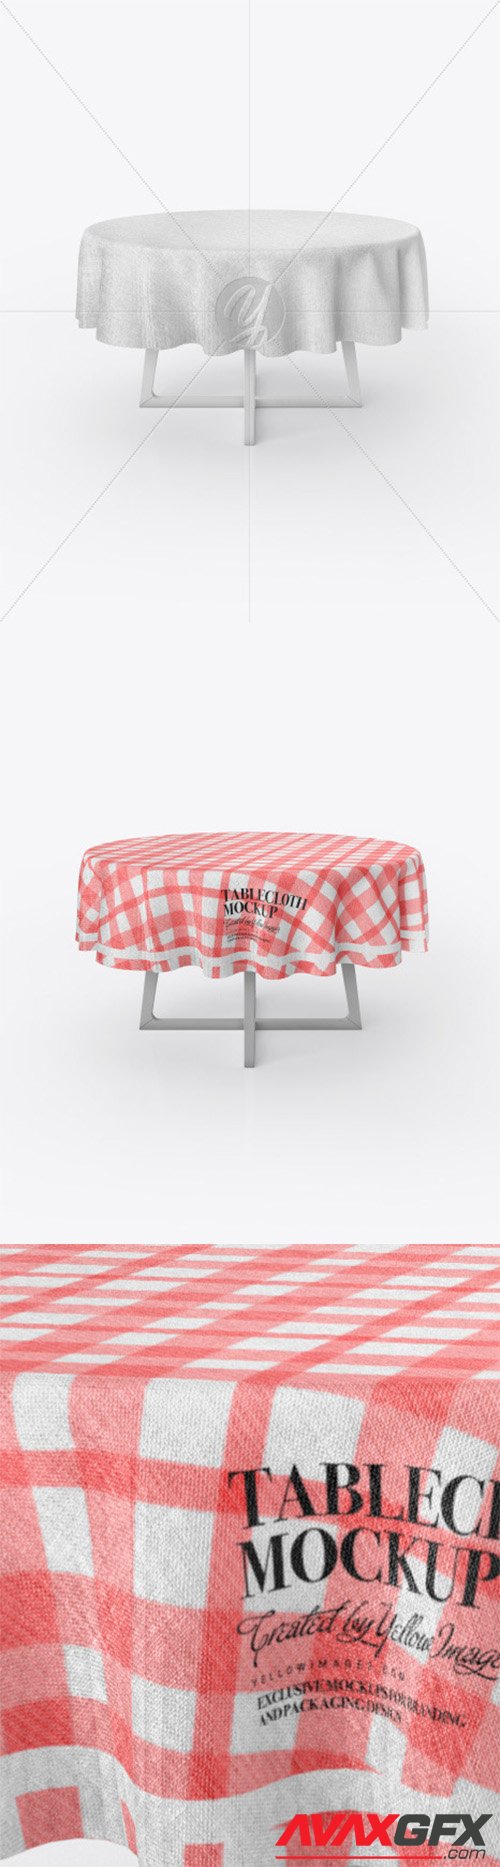 Tablecloth on Table Mockup 56800